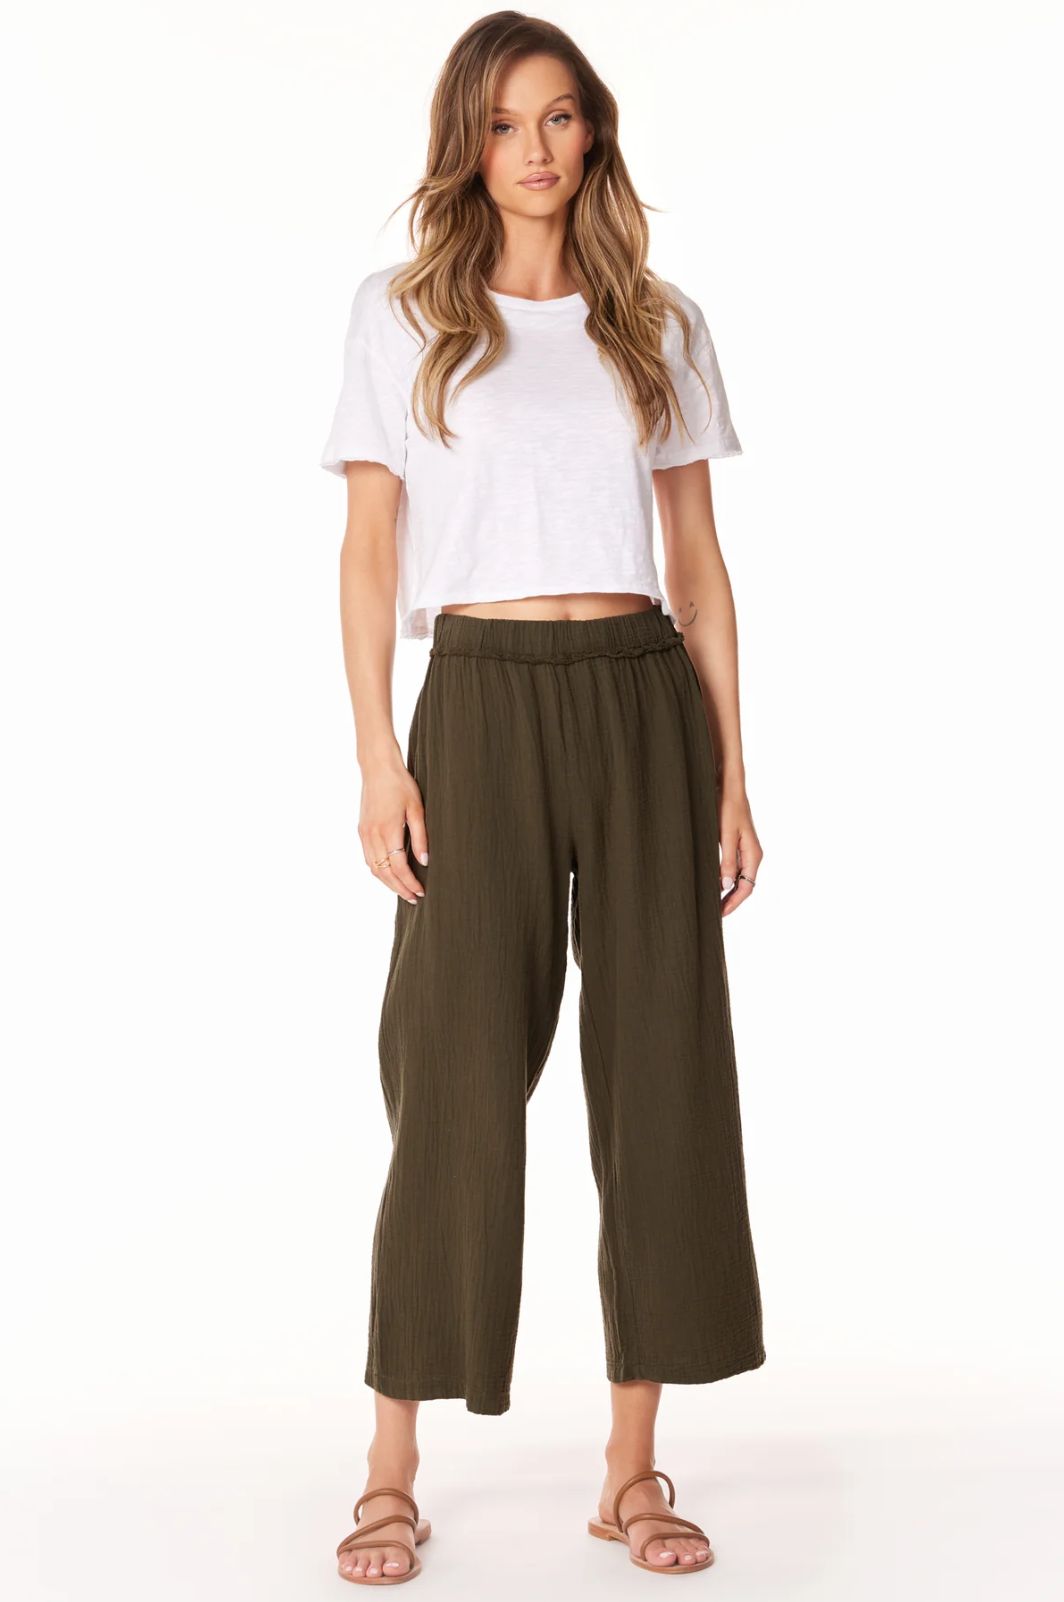 BUIgtTklOP Pants For Women Clearance Women's Solid Color Elastic Waist  Straight Barrel Cotton Pockets Pants 